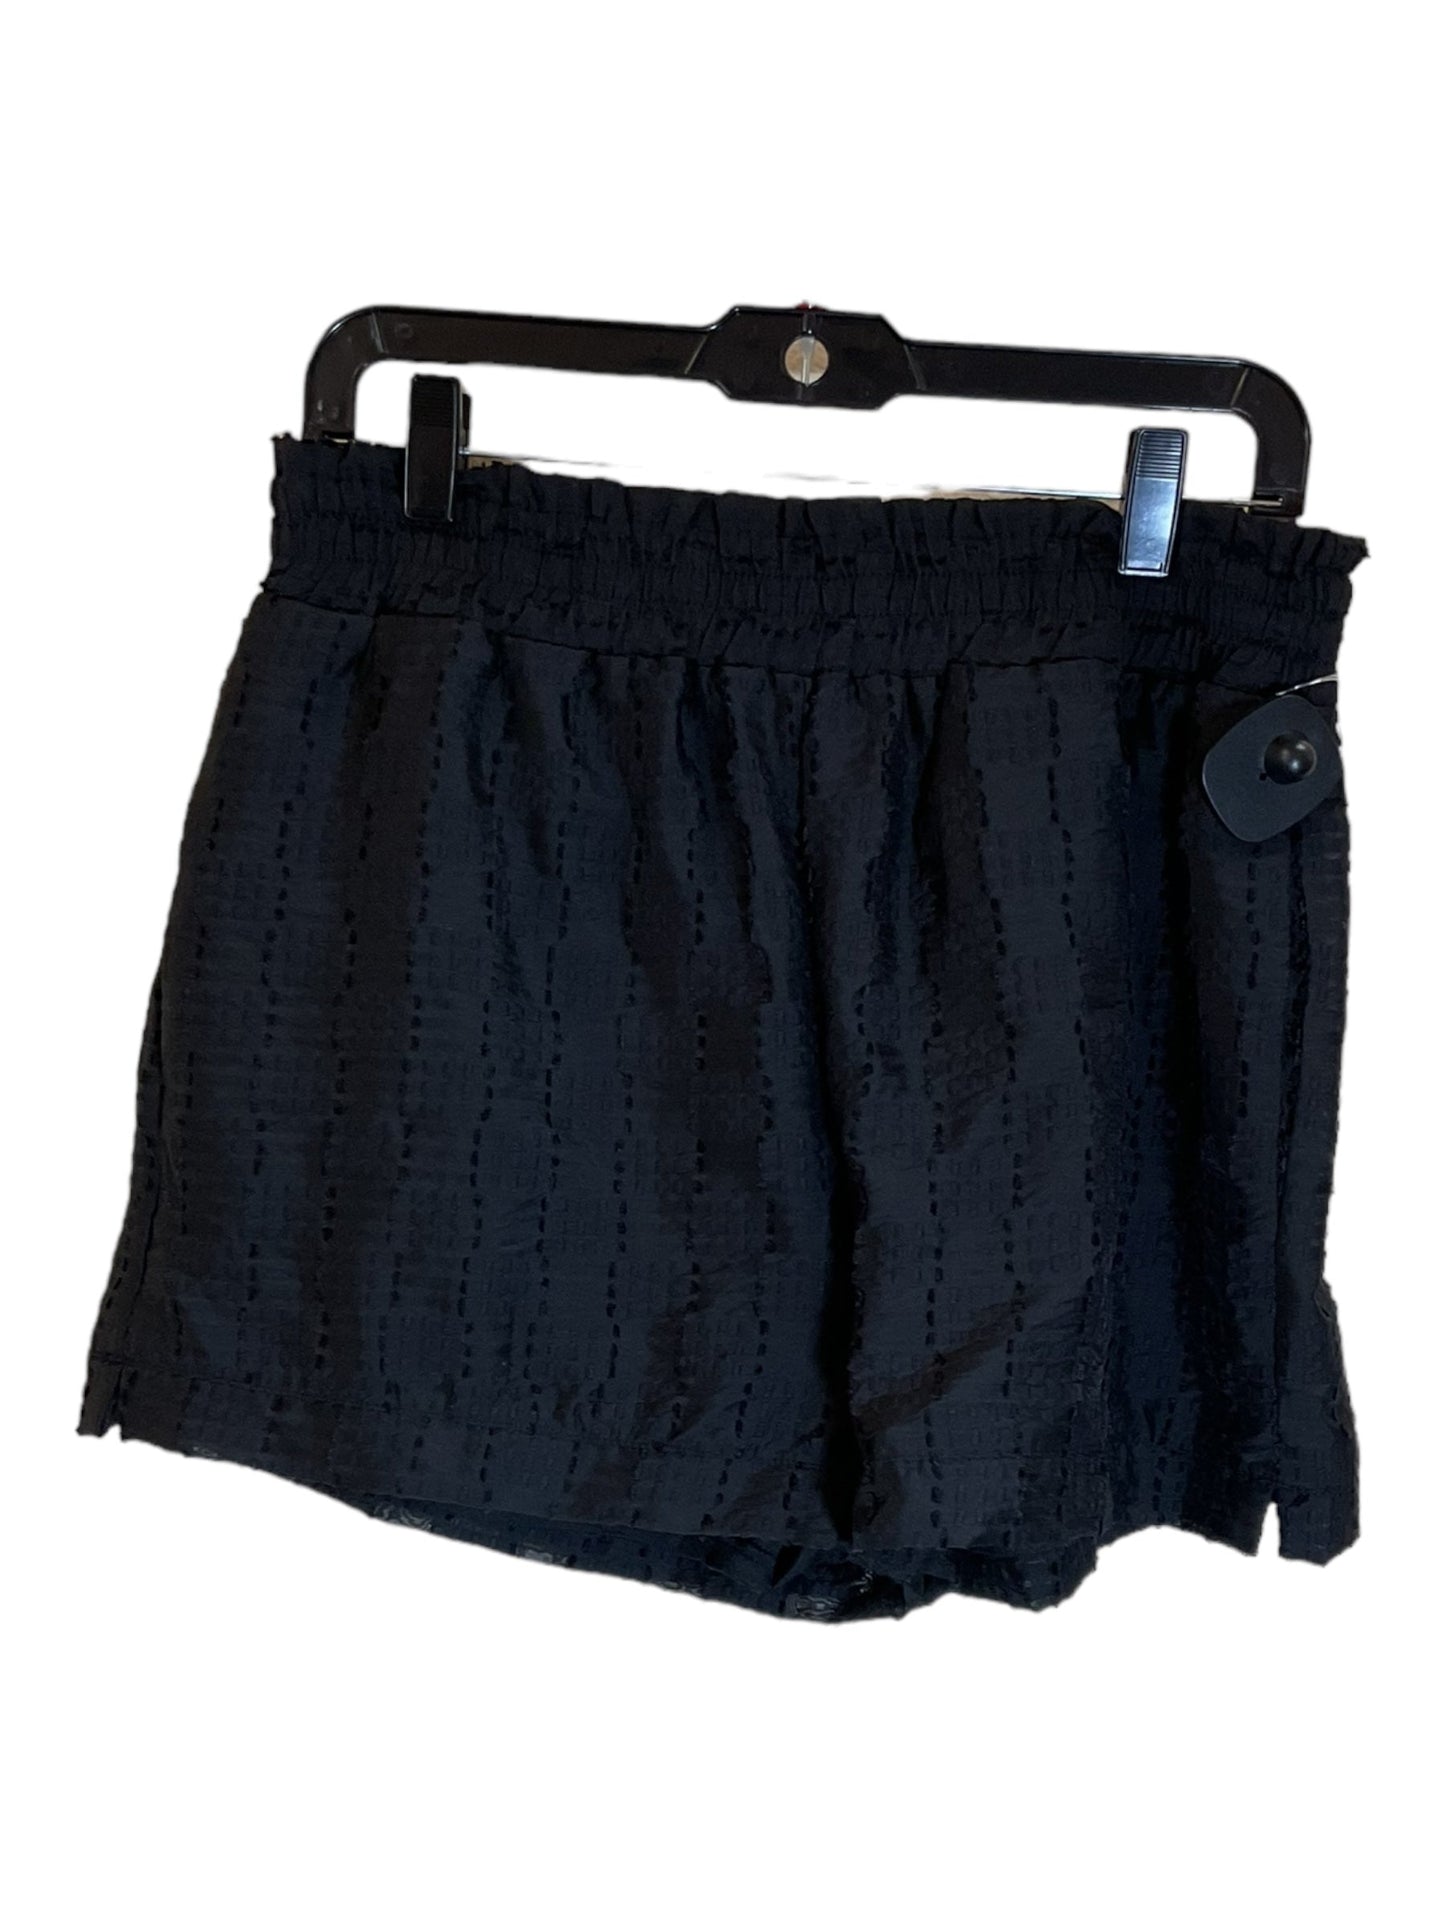 Black Shorts Clothes Mentor, Size 12